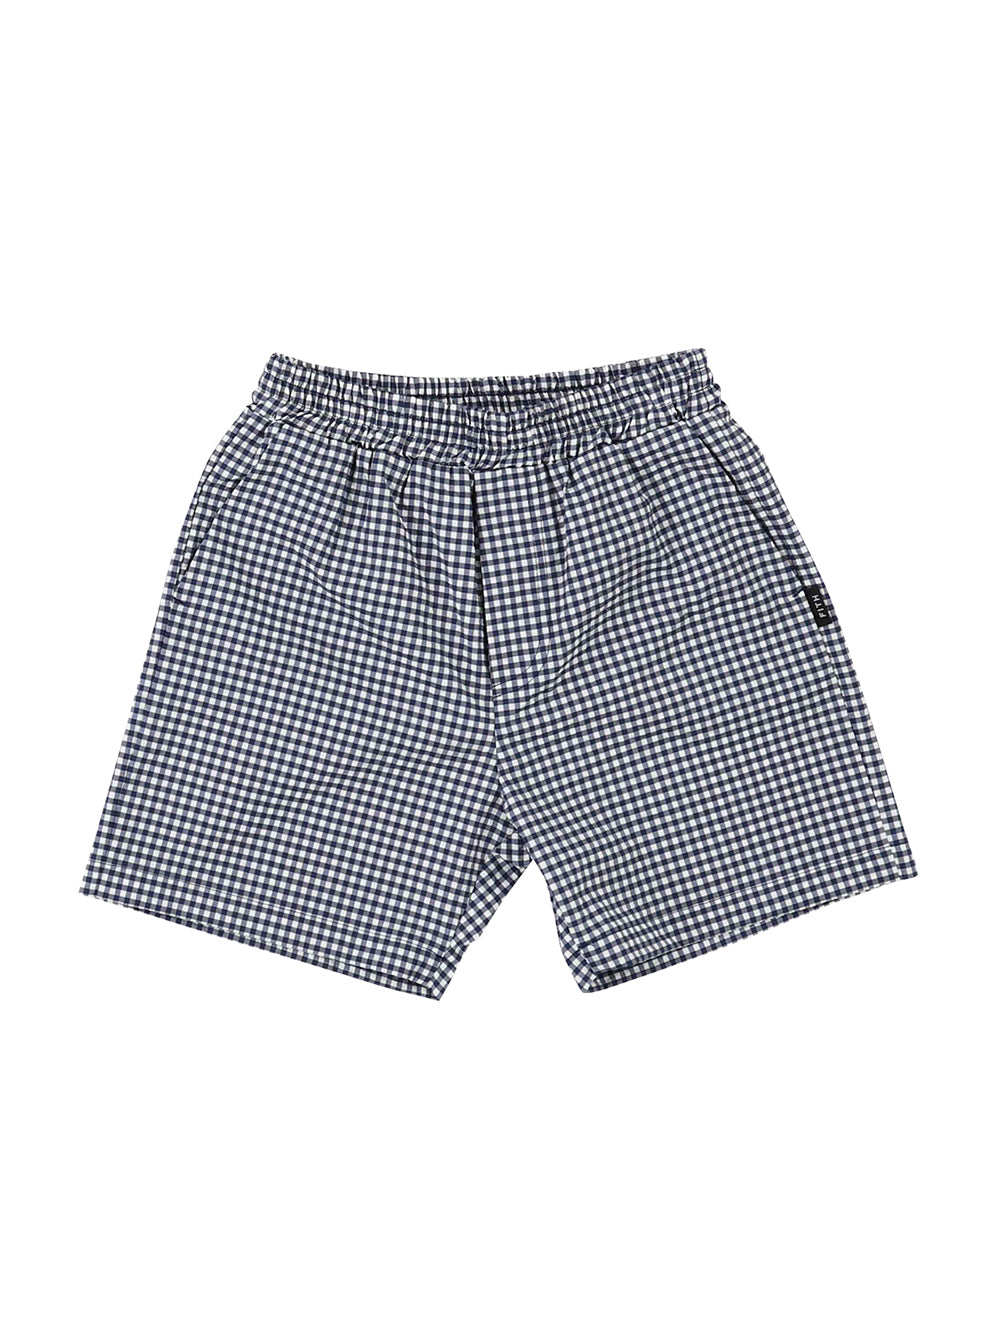 Coolmax Micro-Checked Shorts